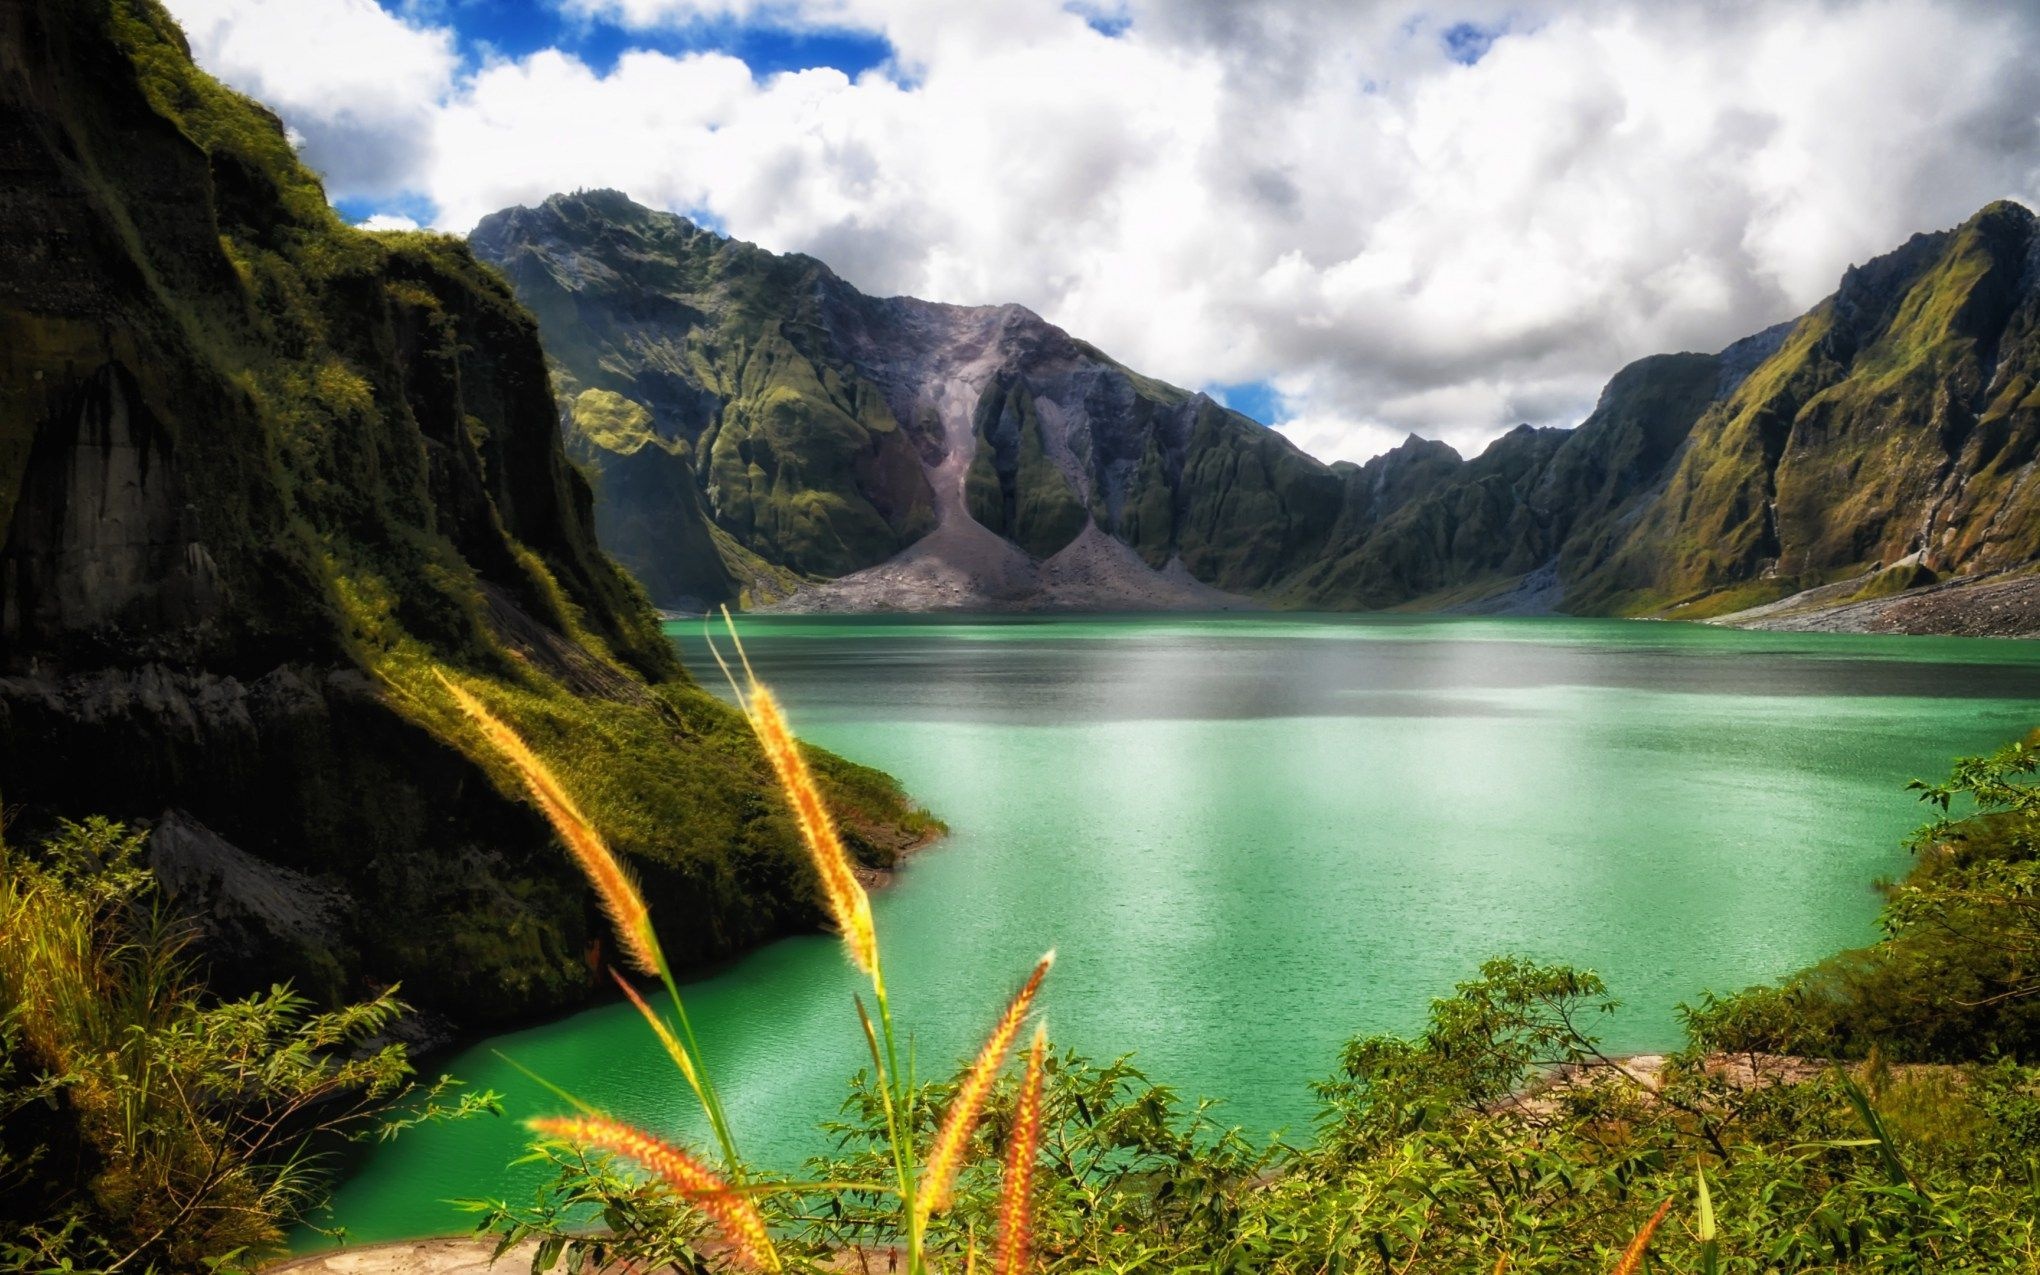 Mount Pinatubo, Scenic wallpapers, High resolution, Desktop backgrounds, 2040x1280 HD Desktop